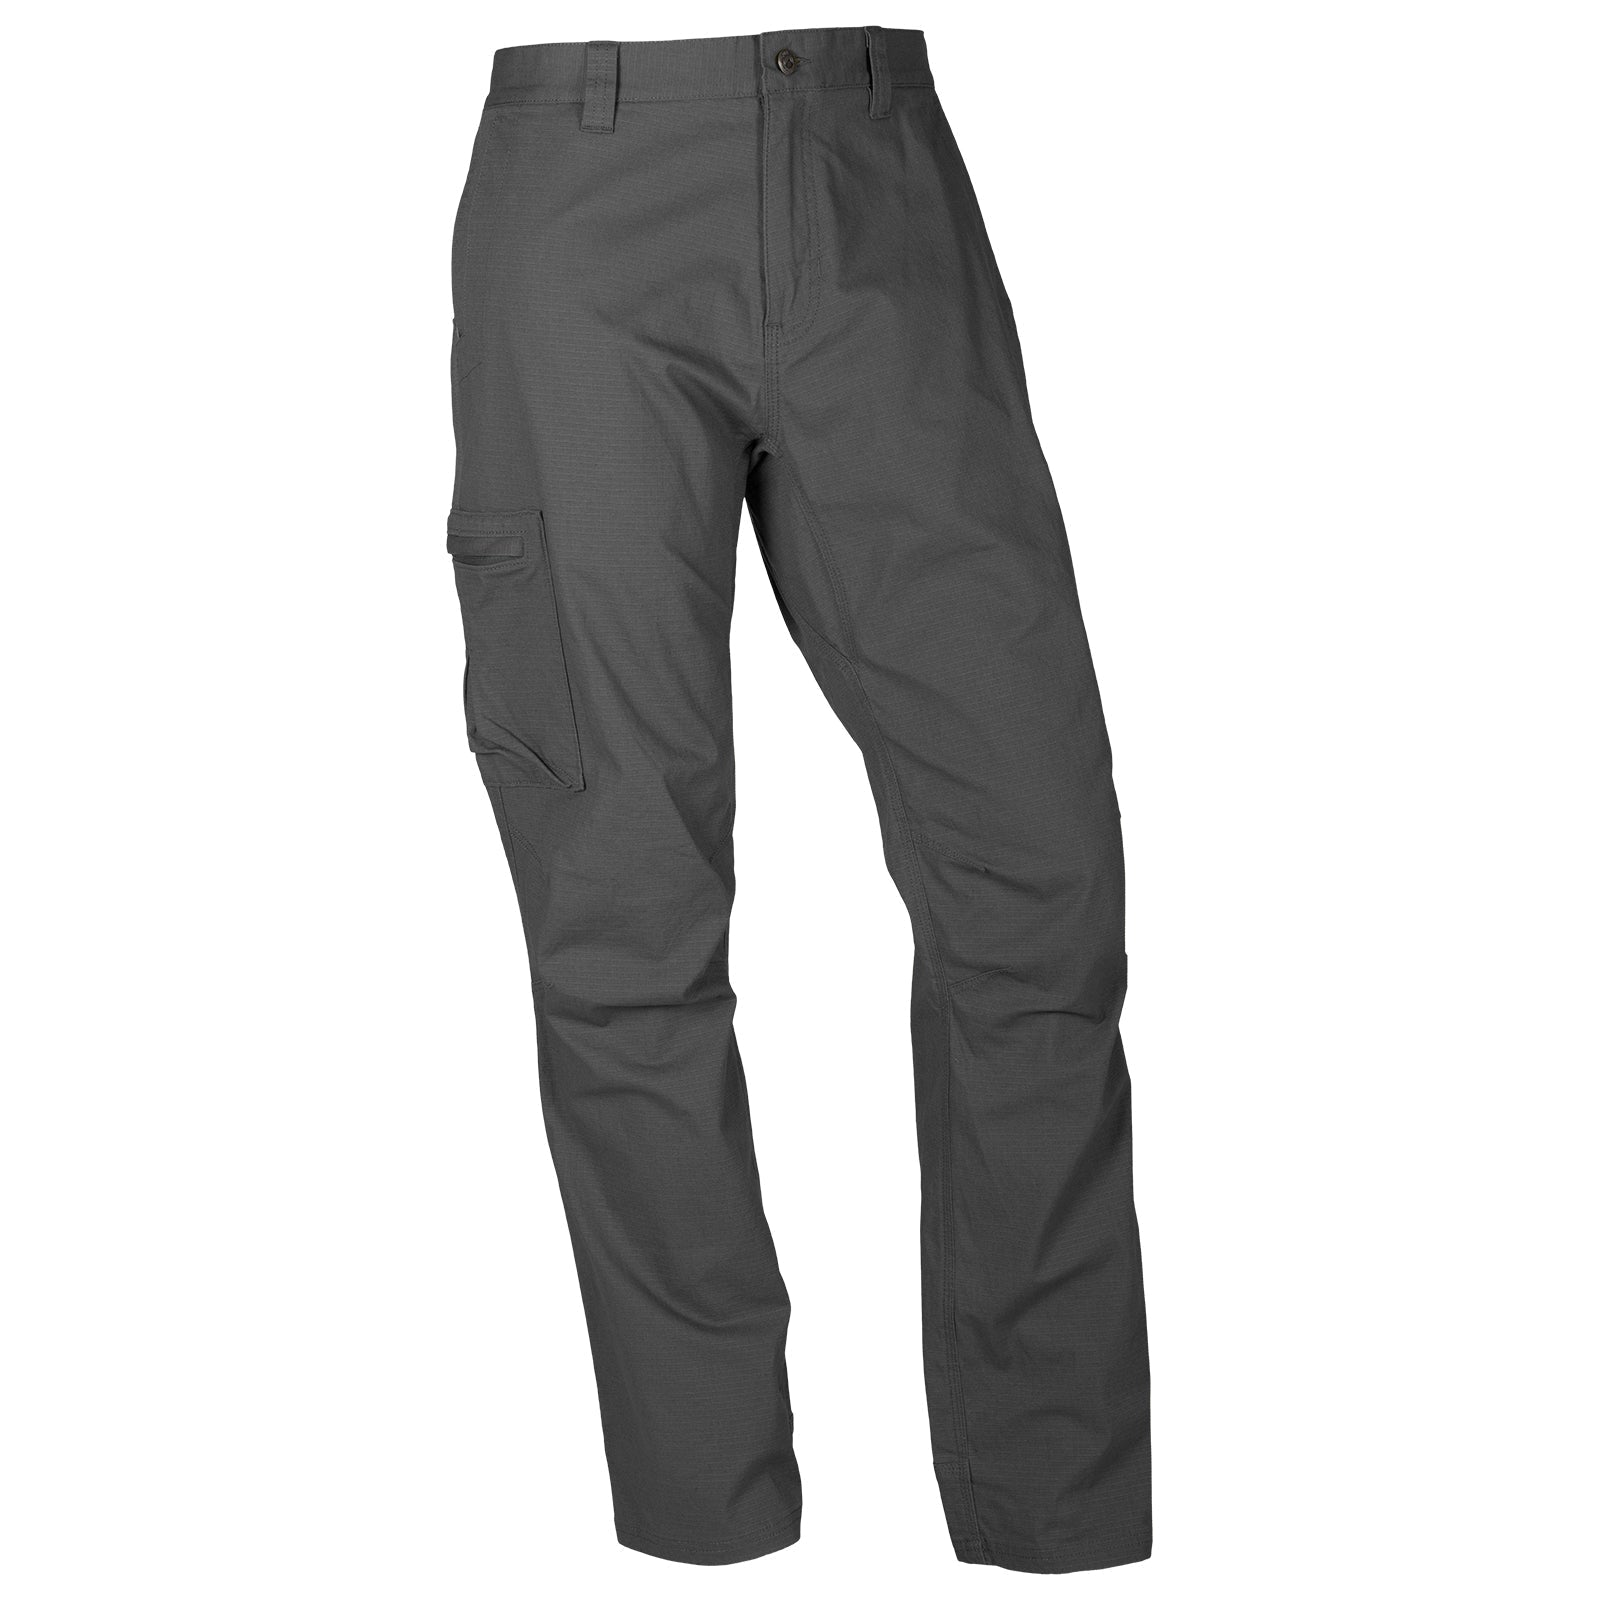 Mountain Khakis Men's Canyon Cord Pant Slim Tailored Fit - Retro